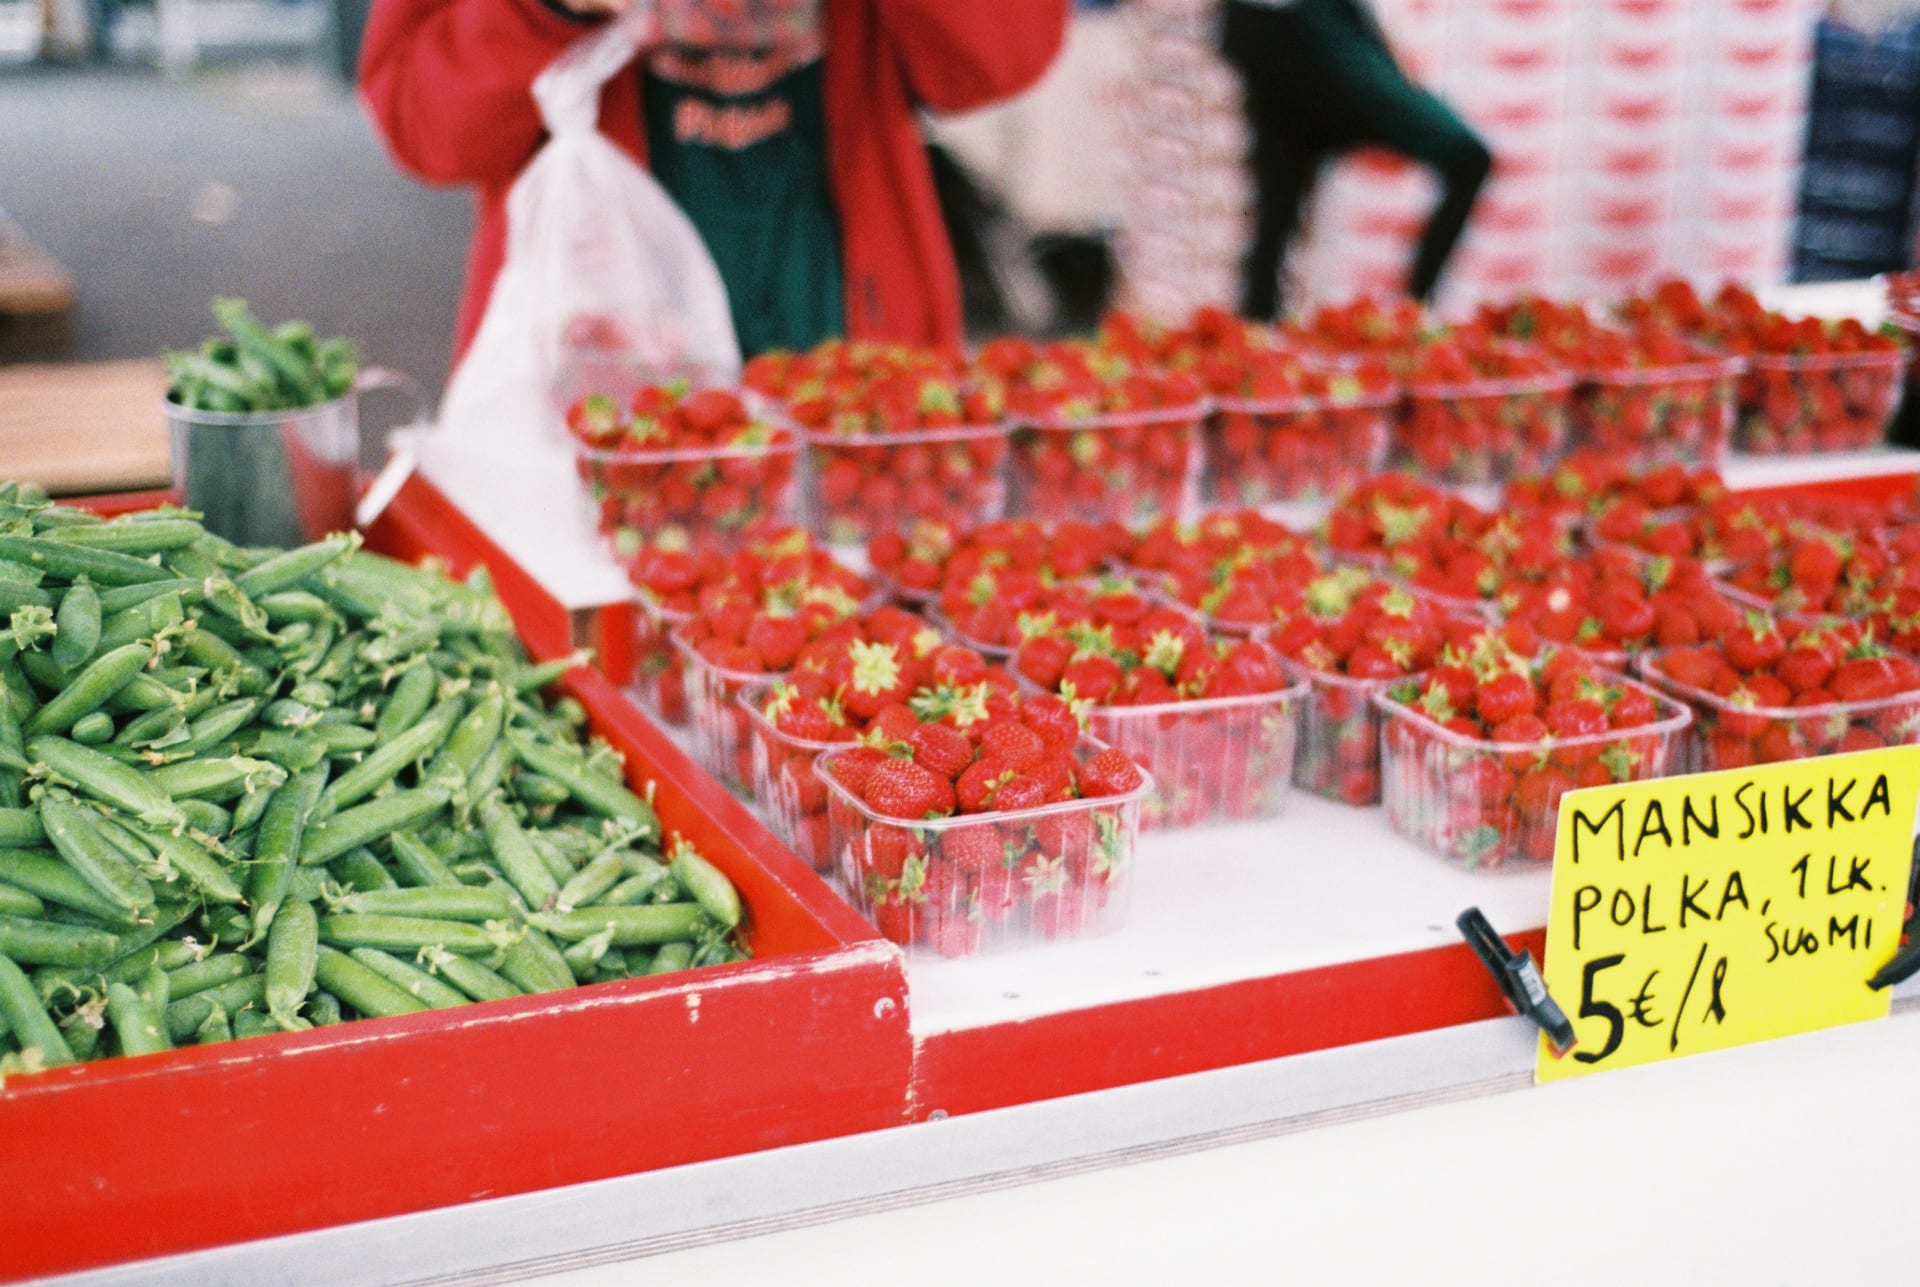 Strawberries for sale in Tammelantori.